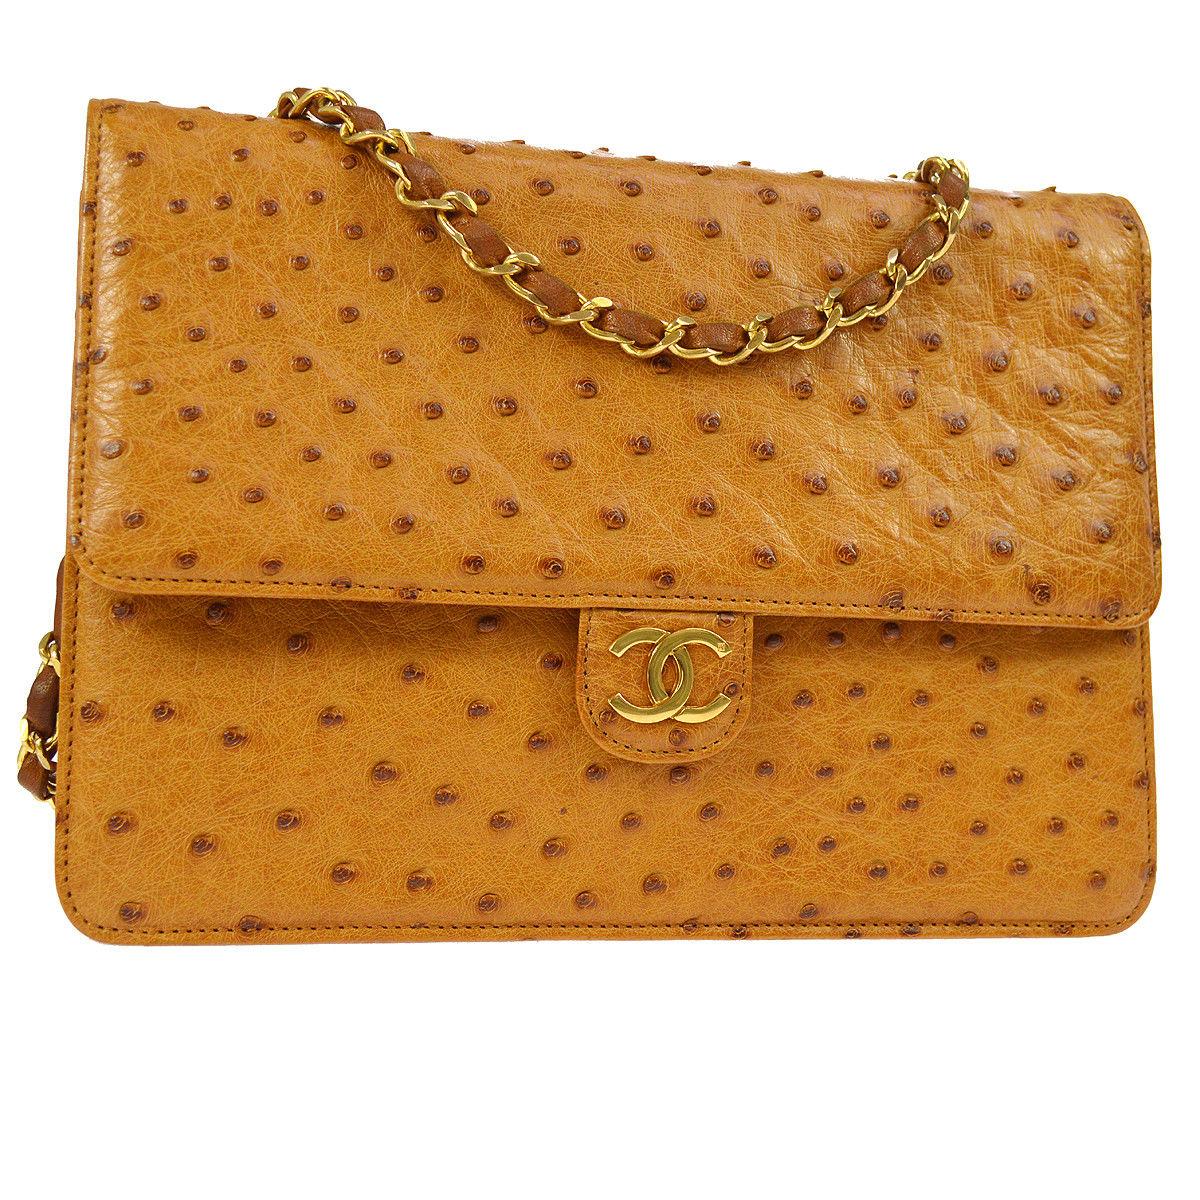 Chanel Rare Exotic Cognac Ostrich Leather Gold Single Evening Shoulder Flap Bag